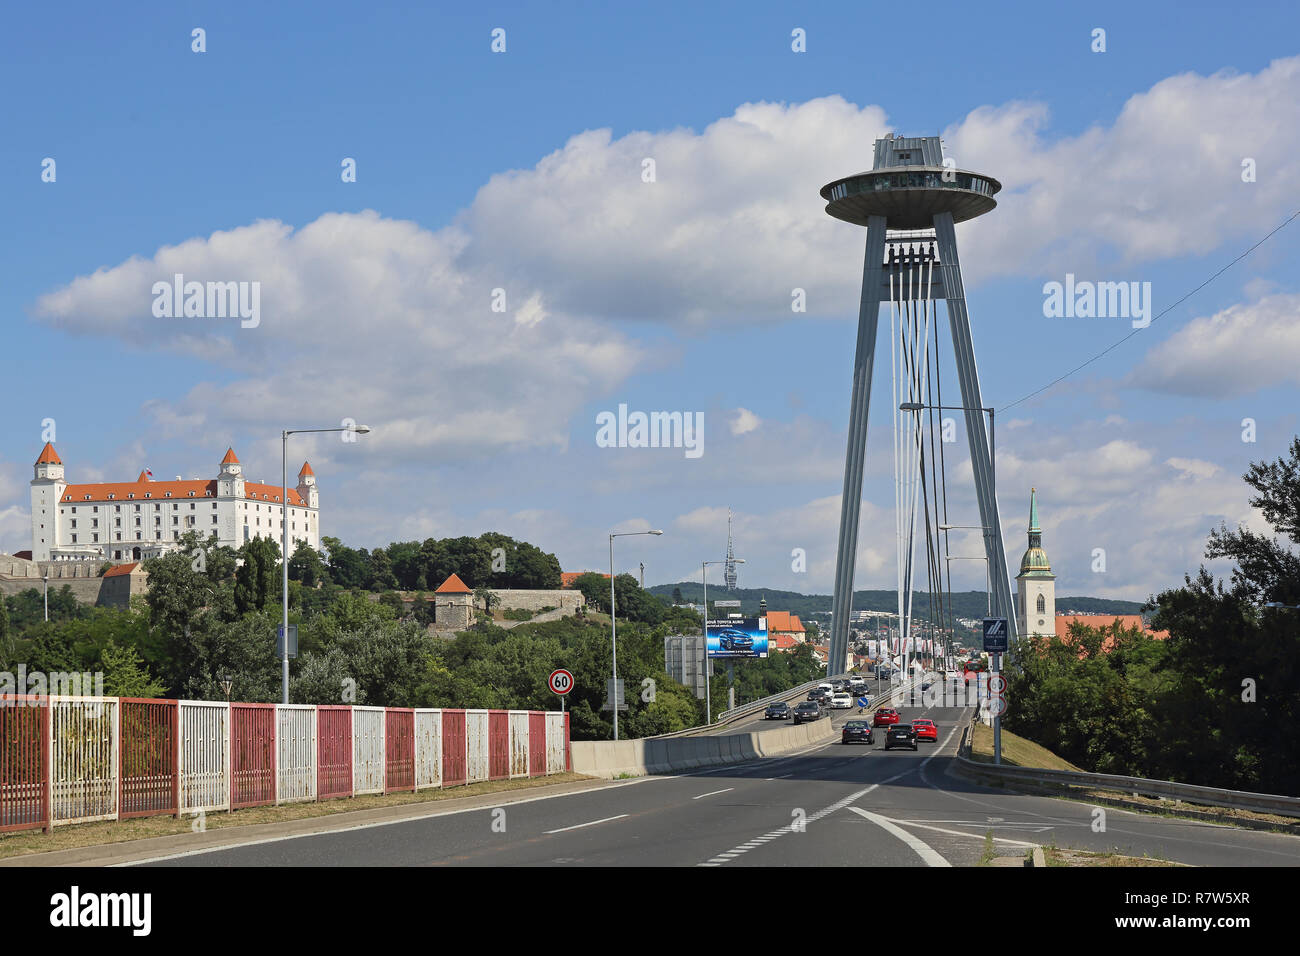 Bratislava, Slovakia - July 10, 2015: Famous SNP Bridge With UFO Restaurant on Top of Pylon in Bratislava, Slovakia. Stock Photo